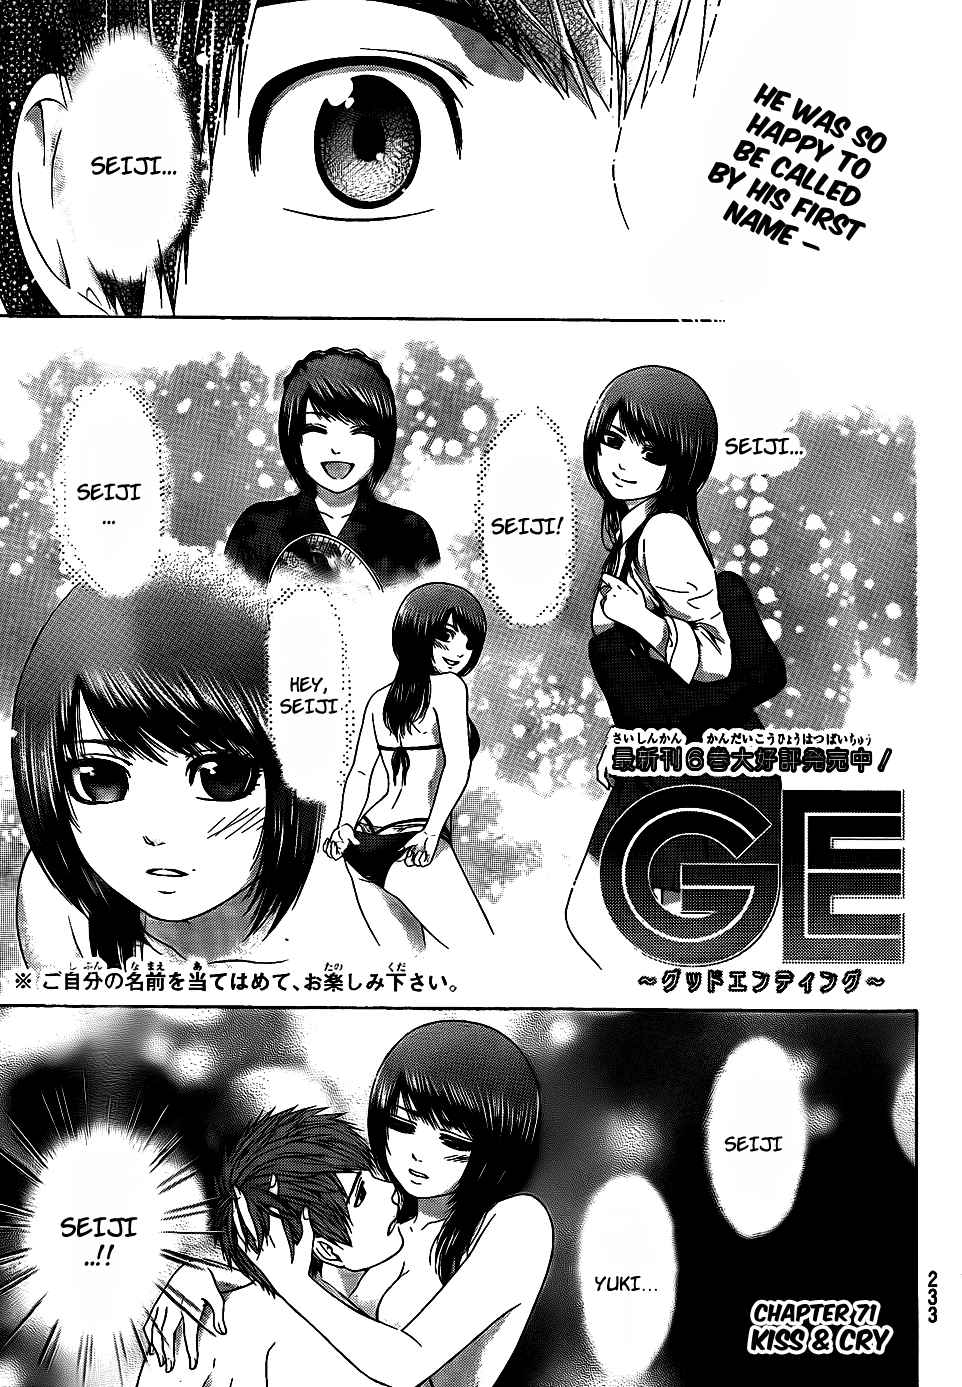 GE ~Good Ending~ Vol. 8 Ch. 71 Kiss & Cry